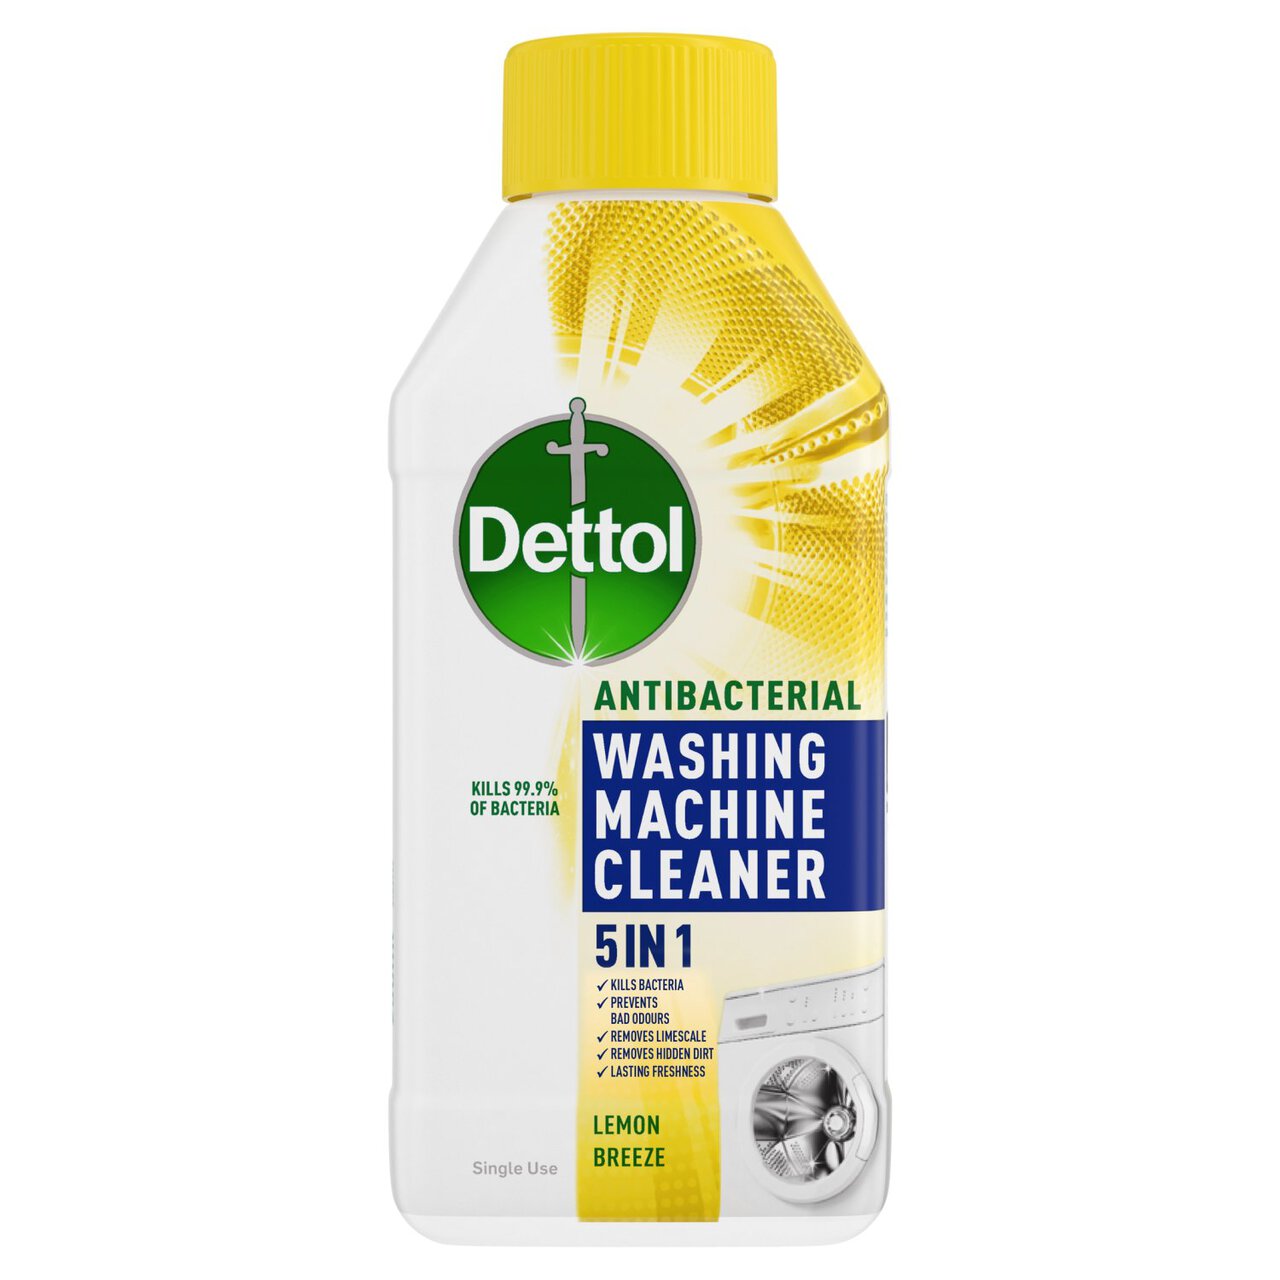 Dettol 5 in 1 Antibacterial Washing Machine Cleaner Lemon Breeze 250ml